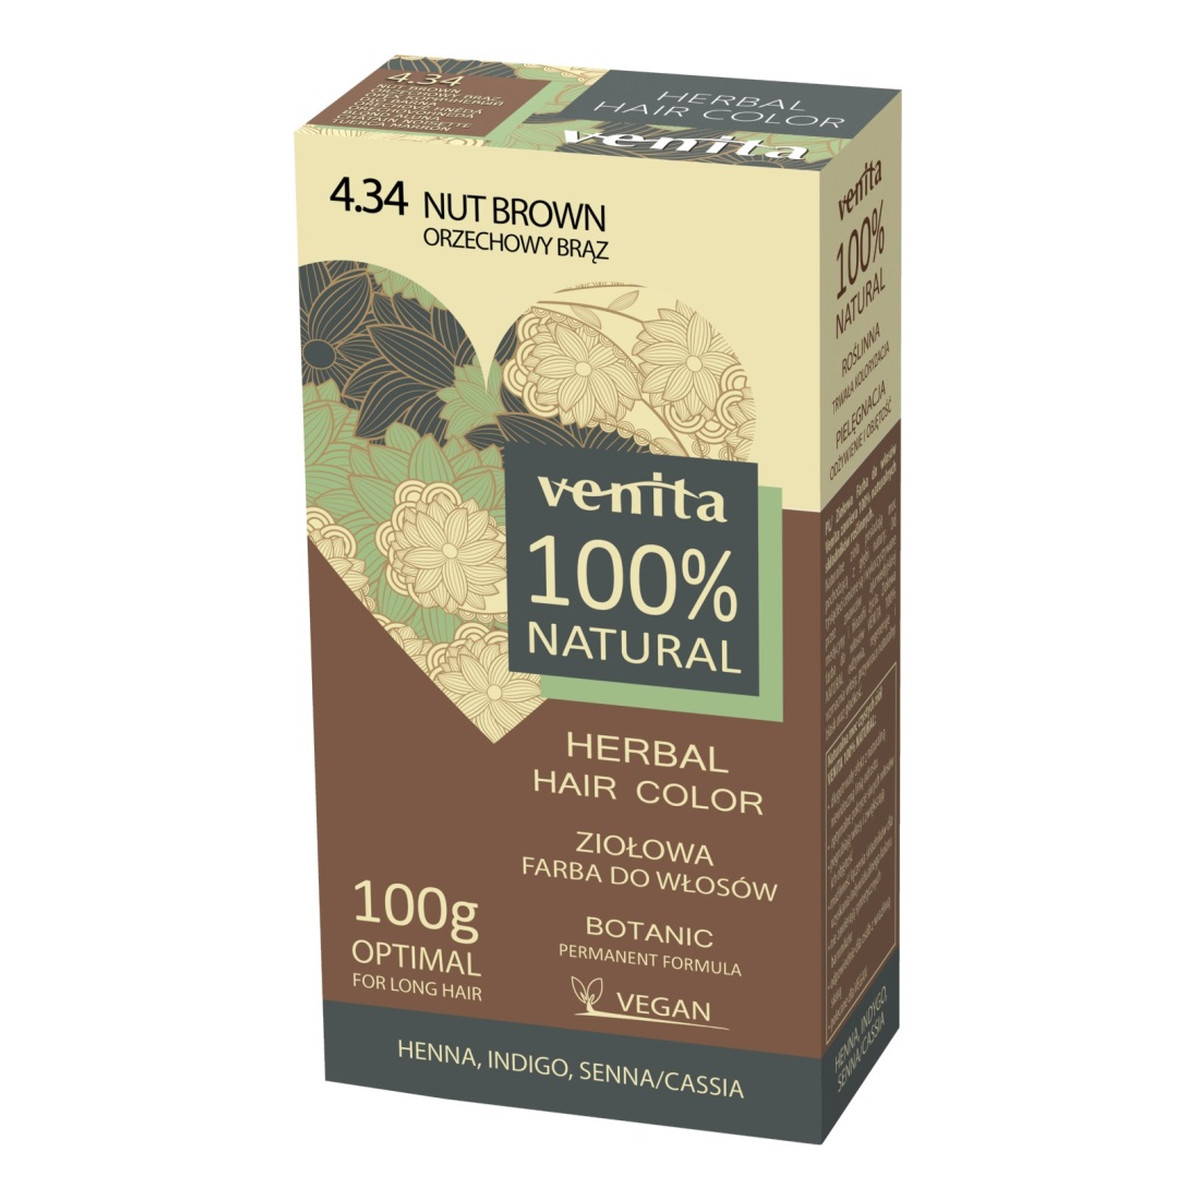 Venita Herbal Hair Color Ziołowa farba do włosów 100g